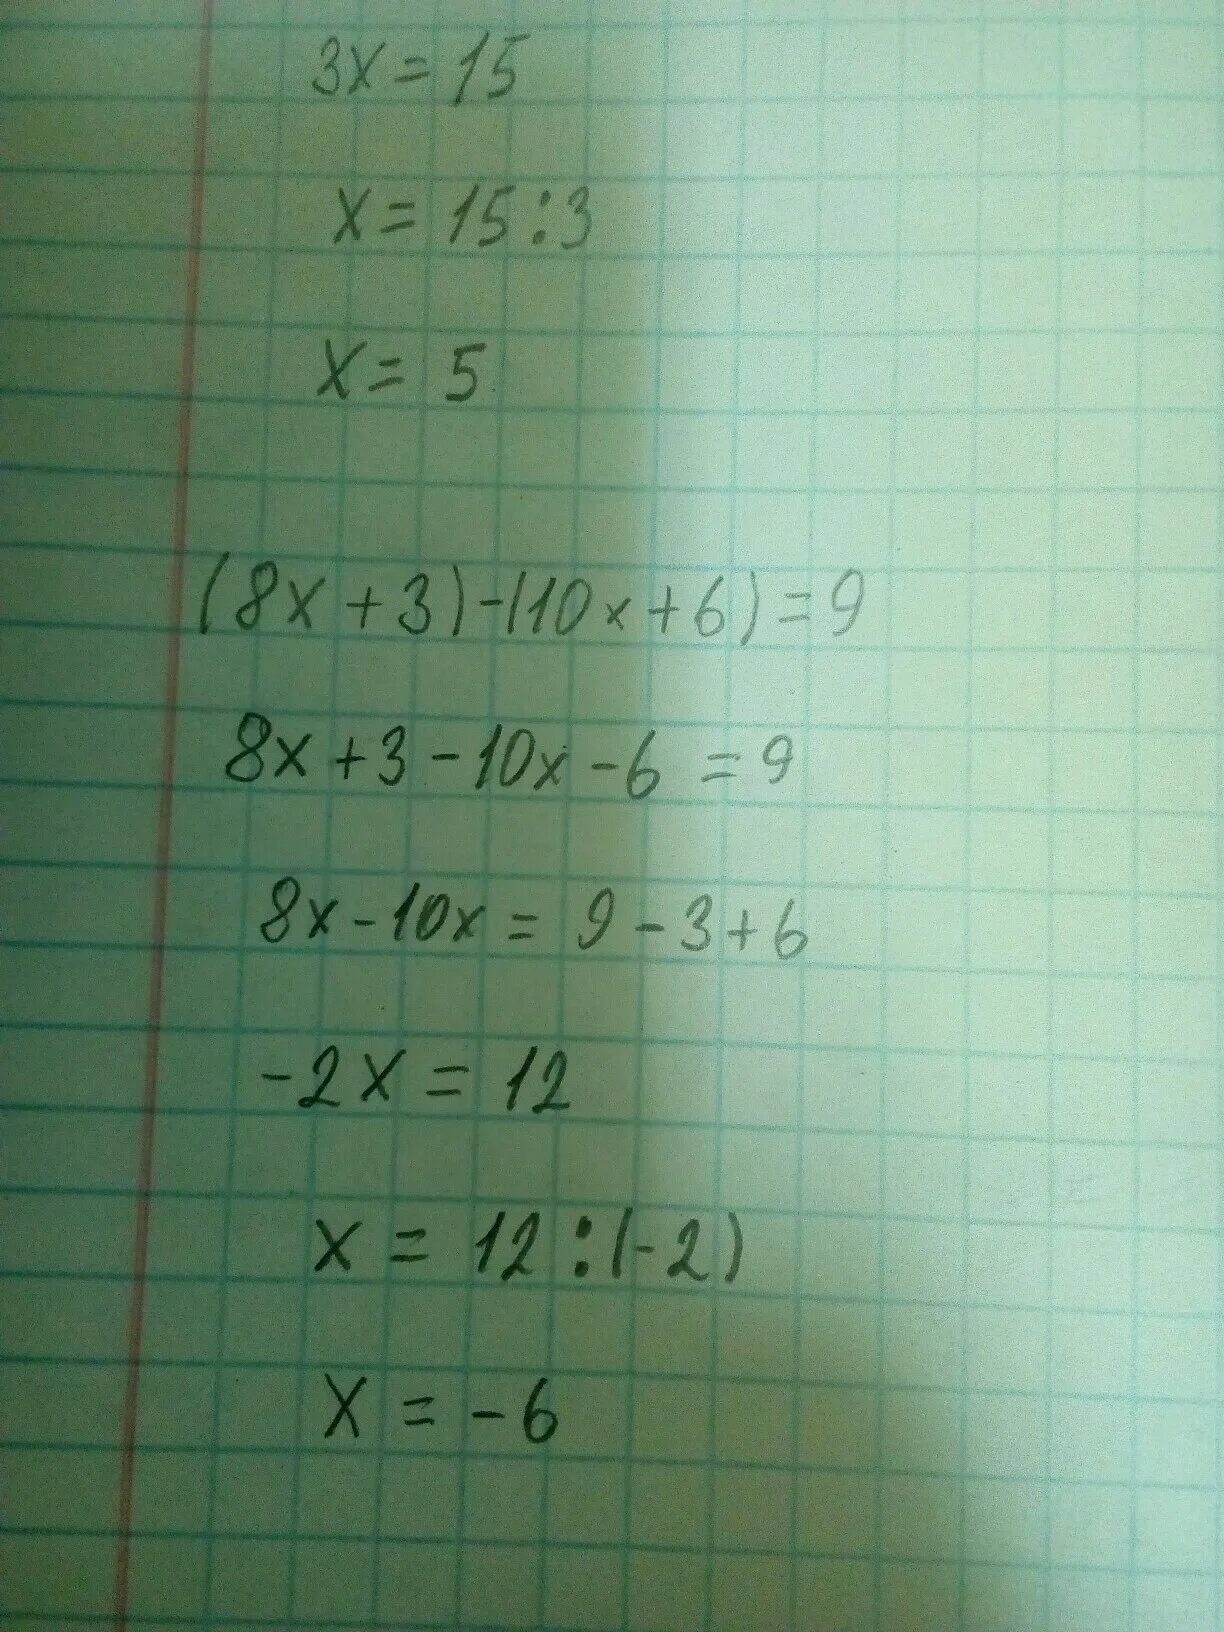 7 5x 8 4 6x 10. (10-X)(10+X). (8x+3)-(10x+6)=9. (2x-10)-(3x-4)=6. 4x-10=x+8 ответ.